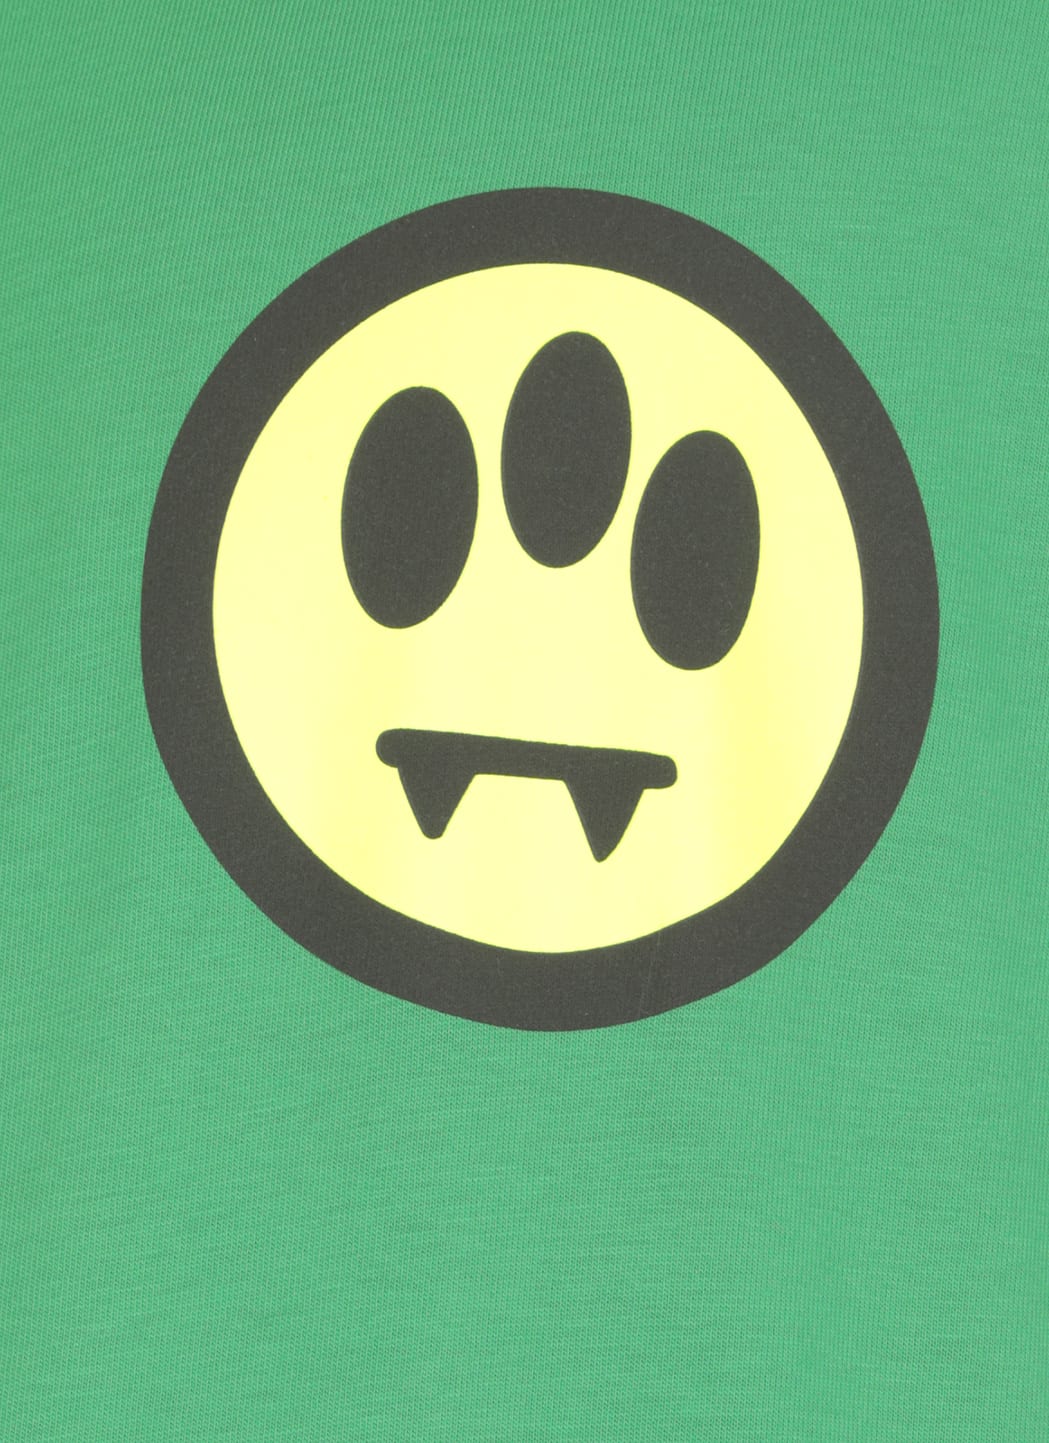 Shop Barrow T-shirt With Logo In Green